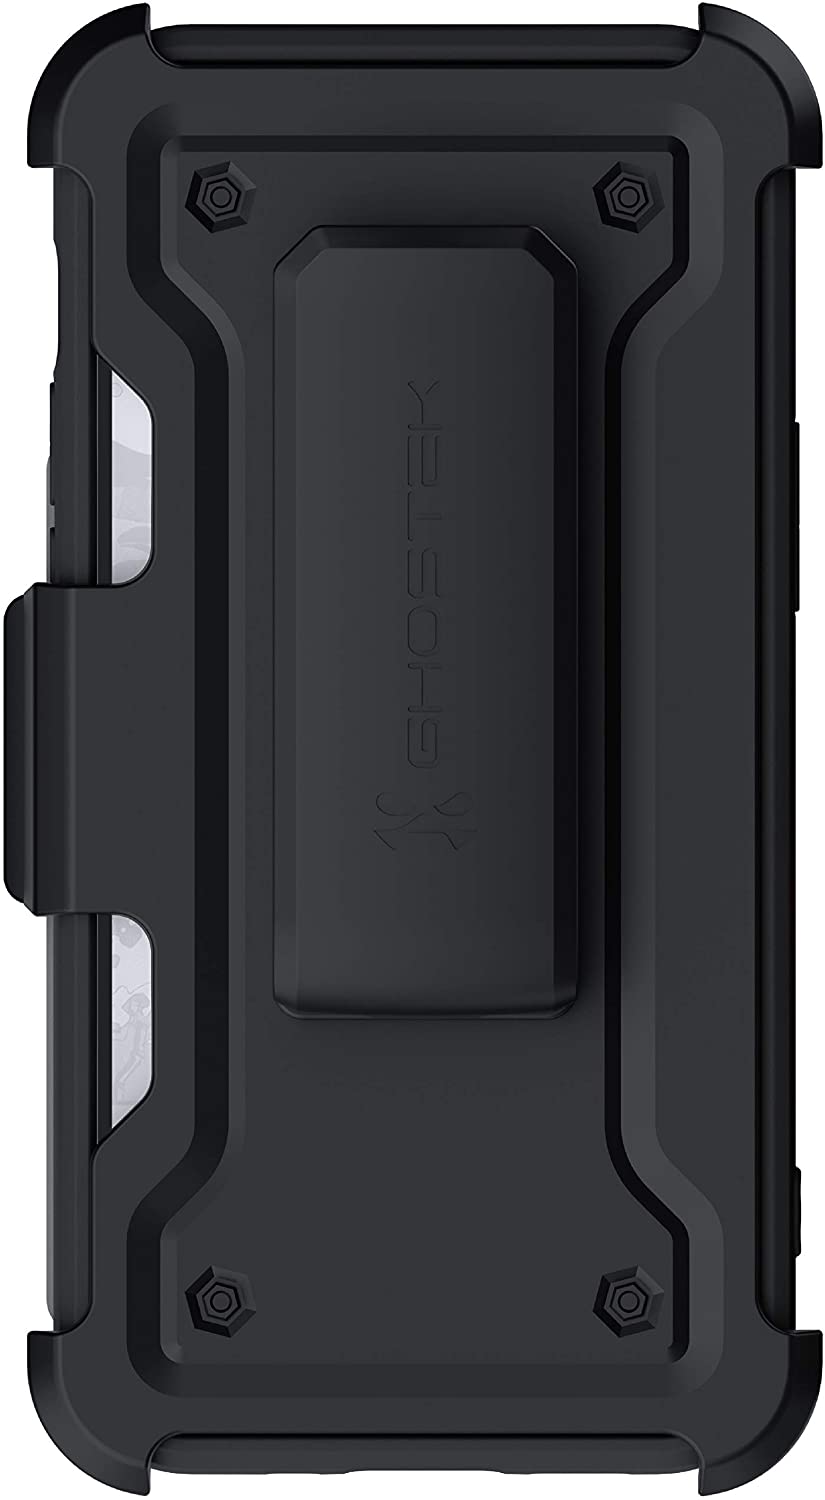 Ghostek Iron Armor 3 Case for iPhone 12 Mini (Black)